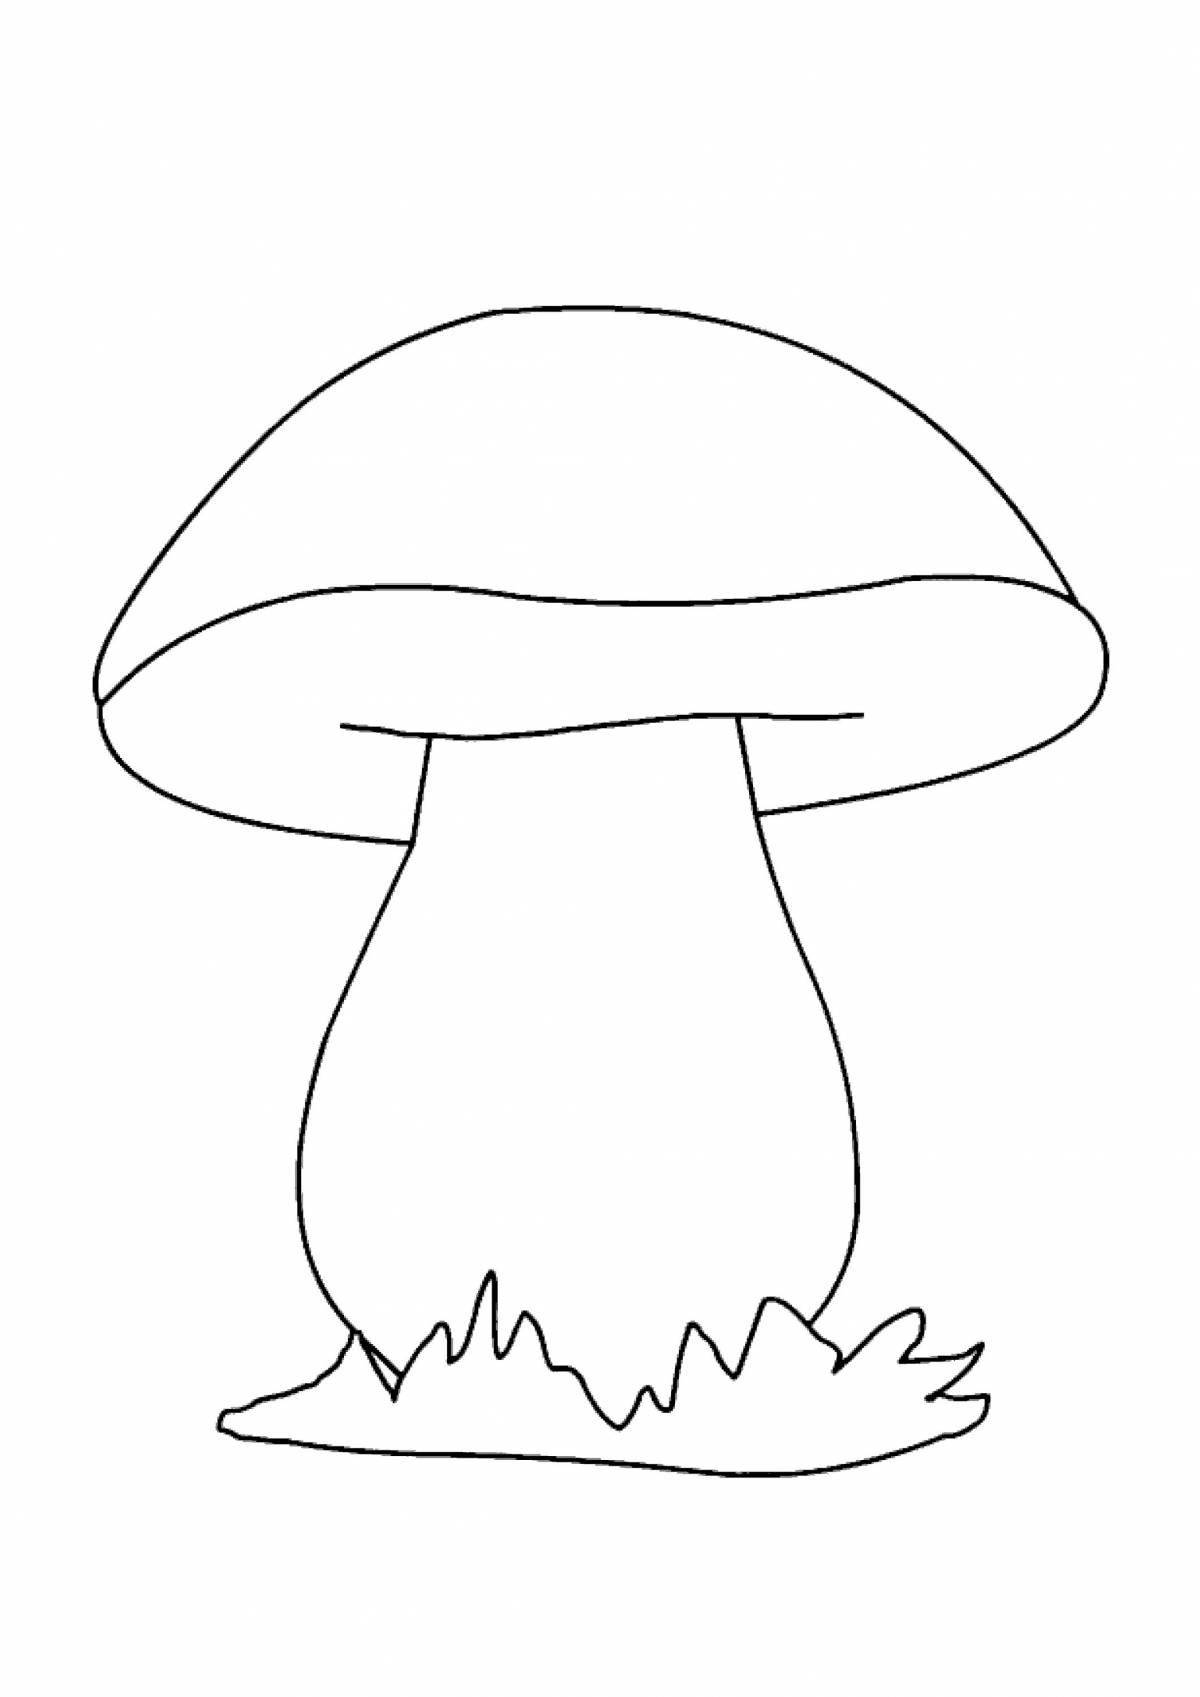 Holiday coloring of mushrooms